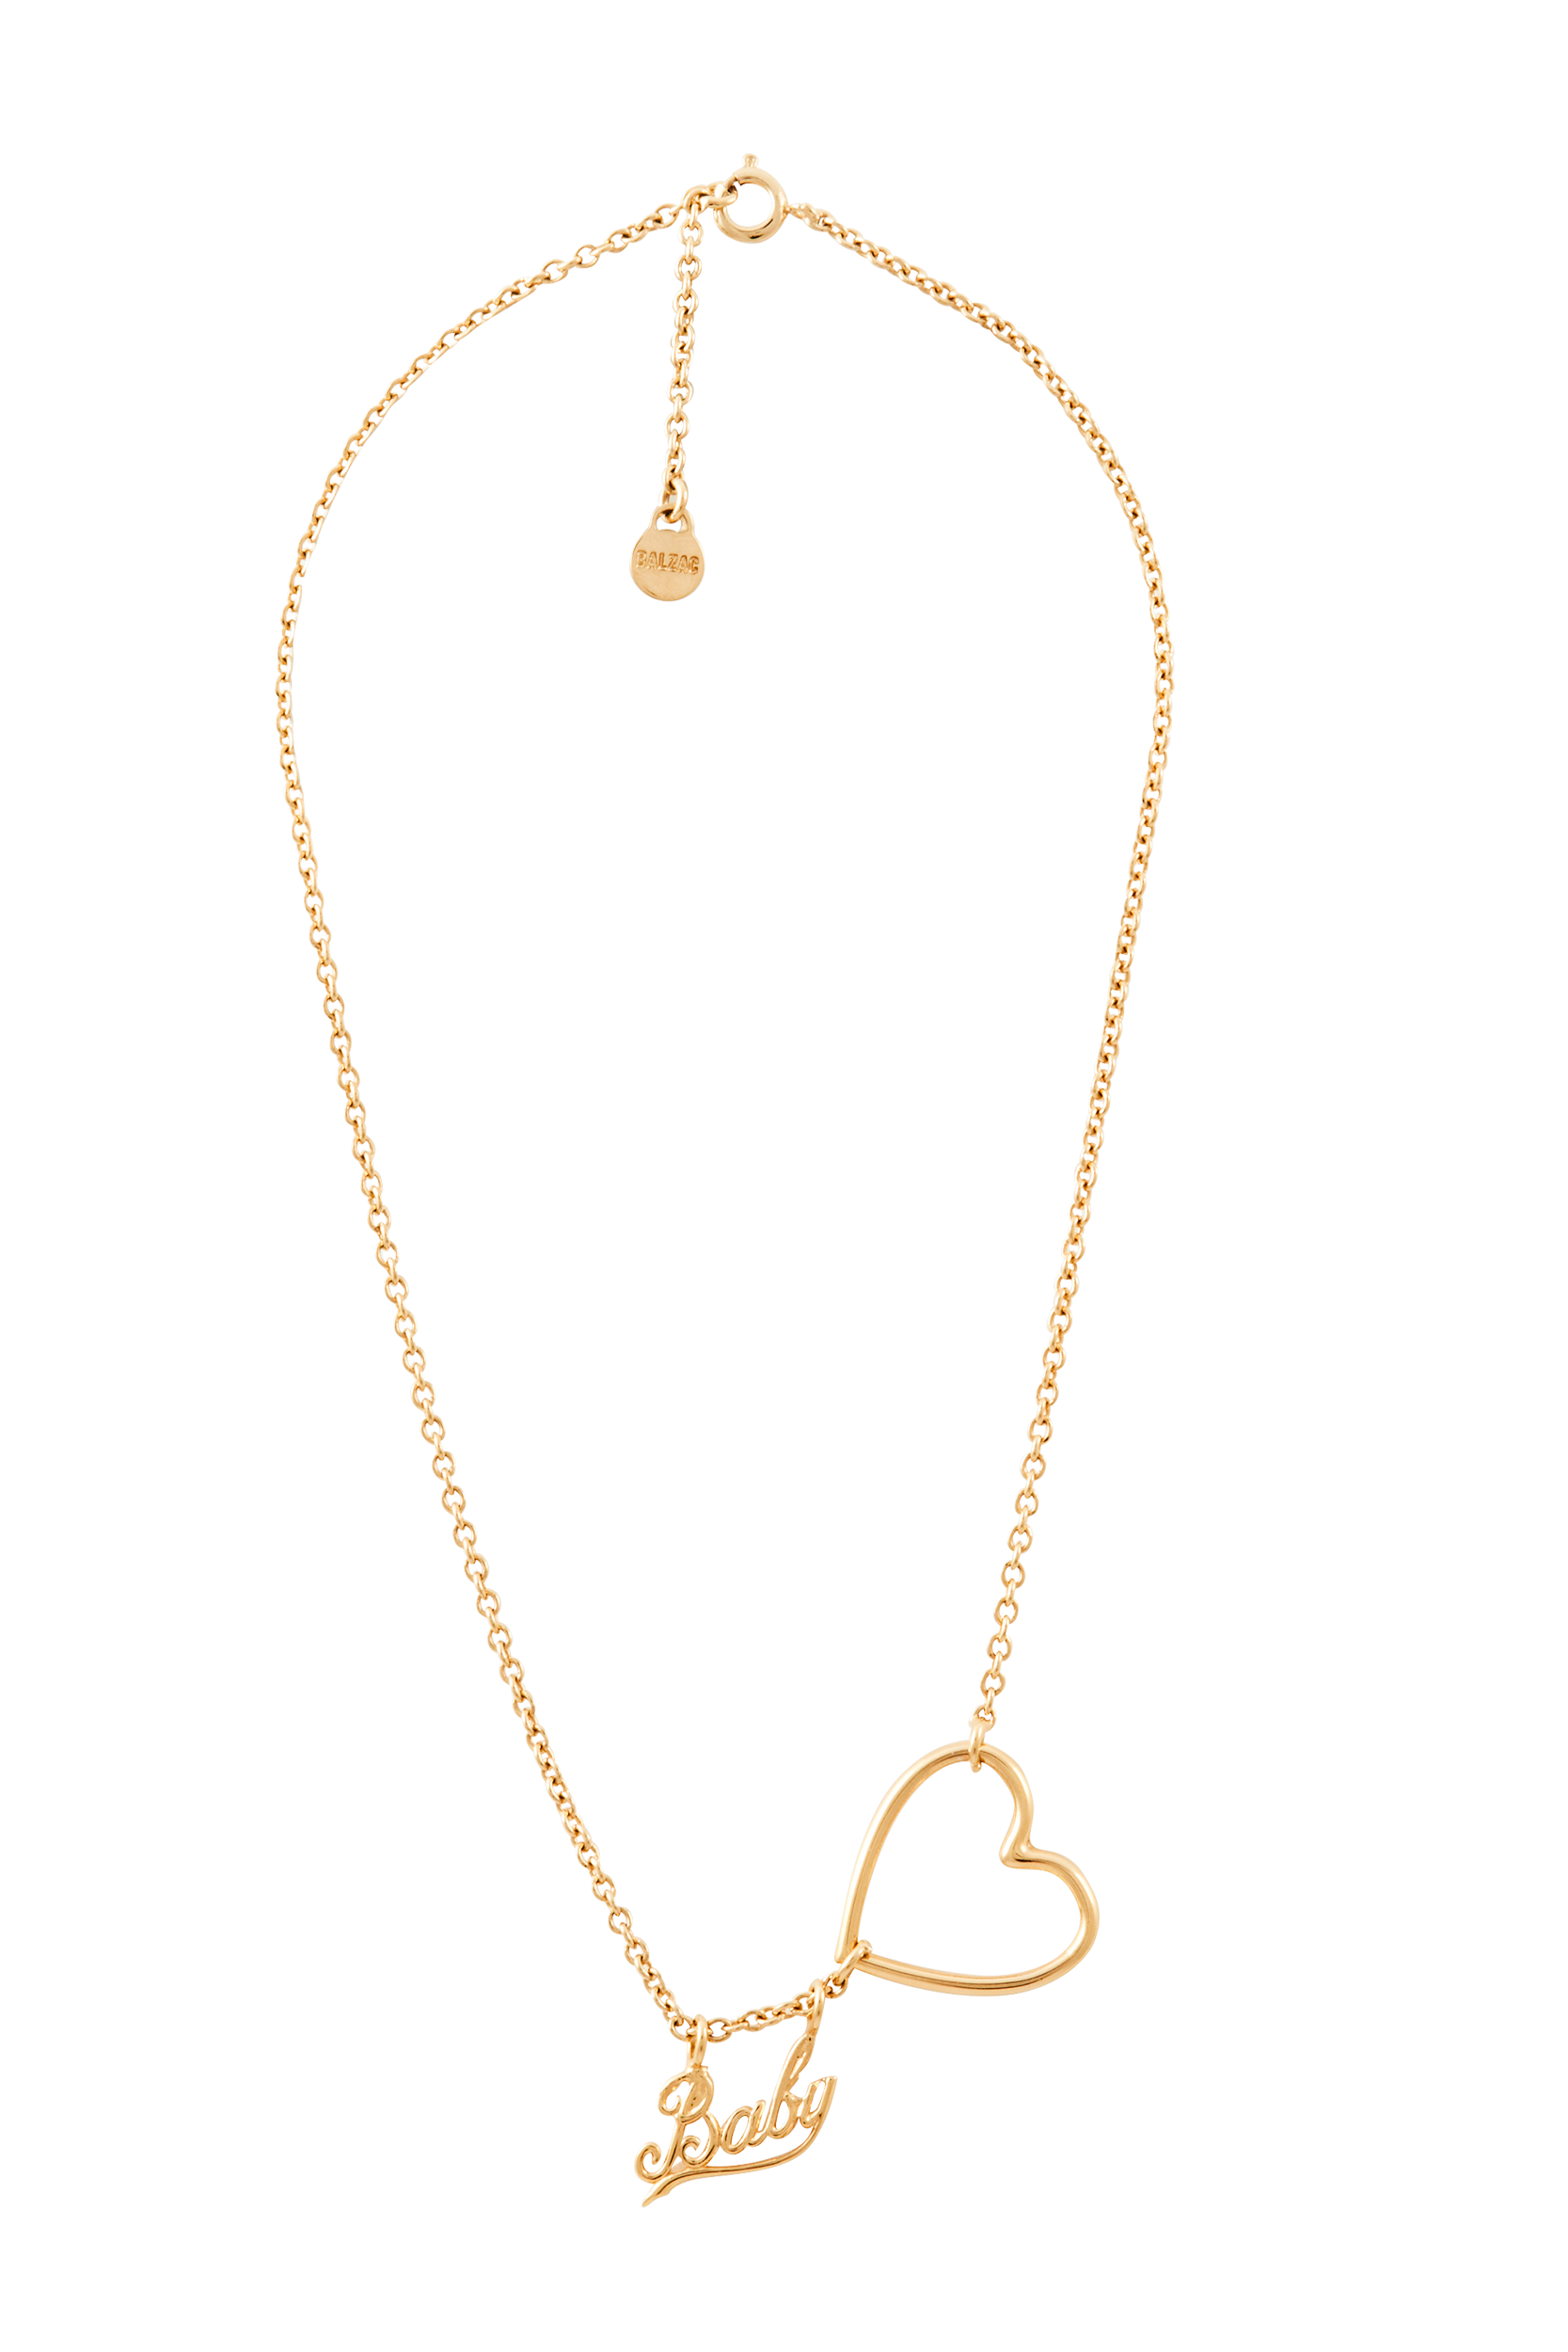 Marina golden heart necklace